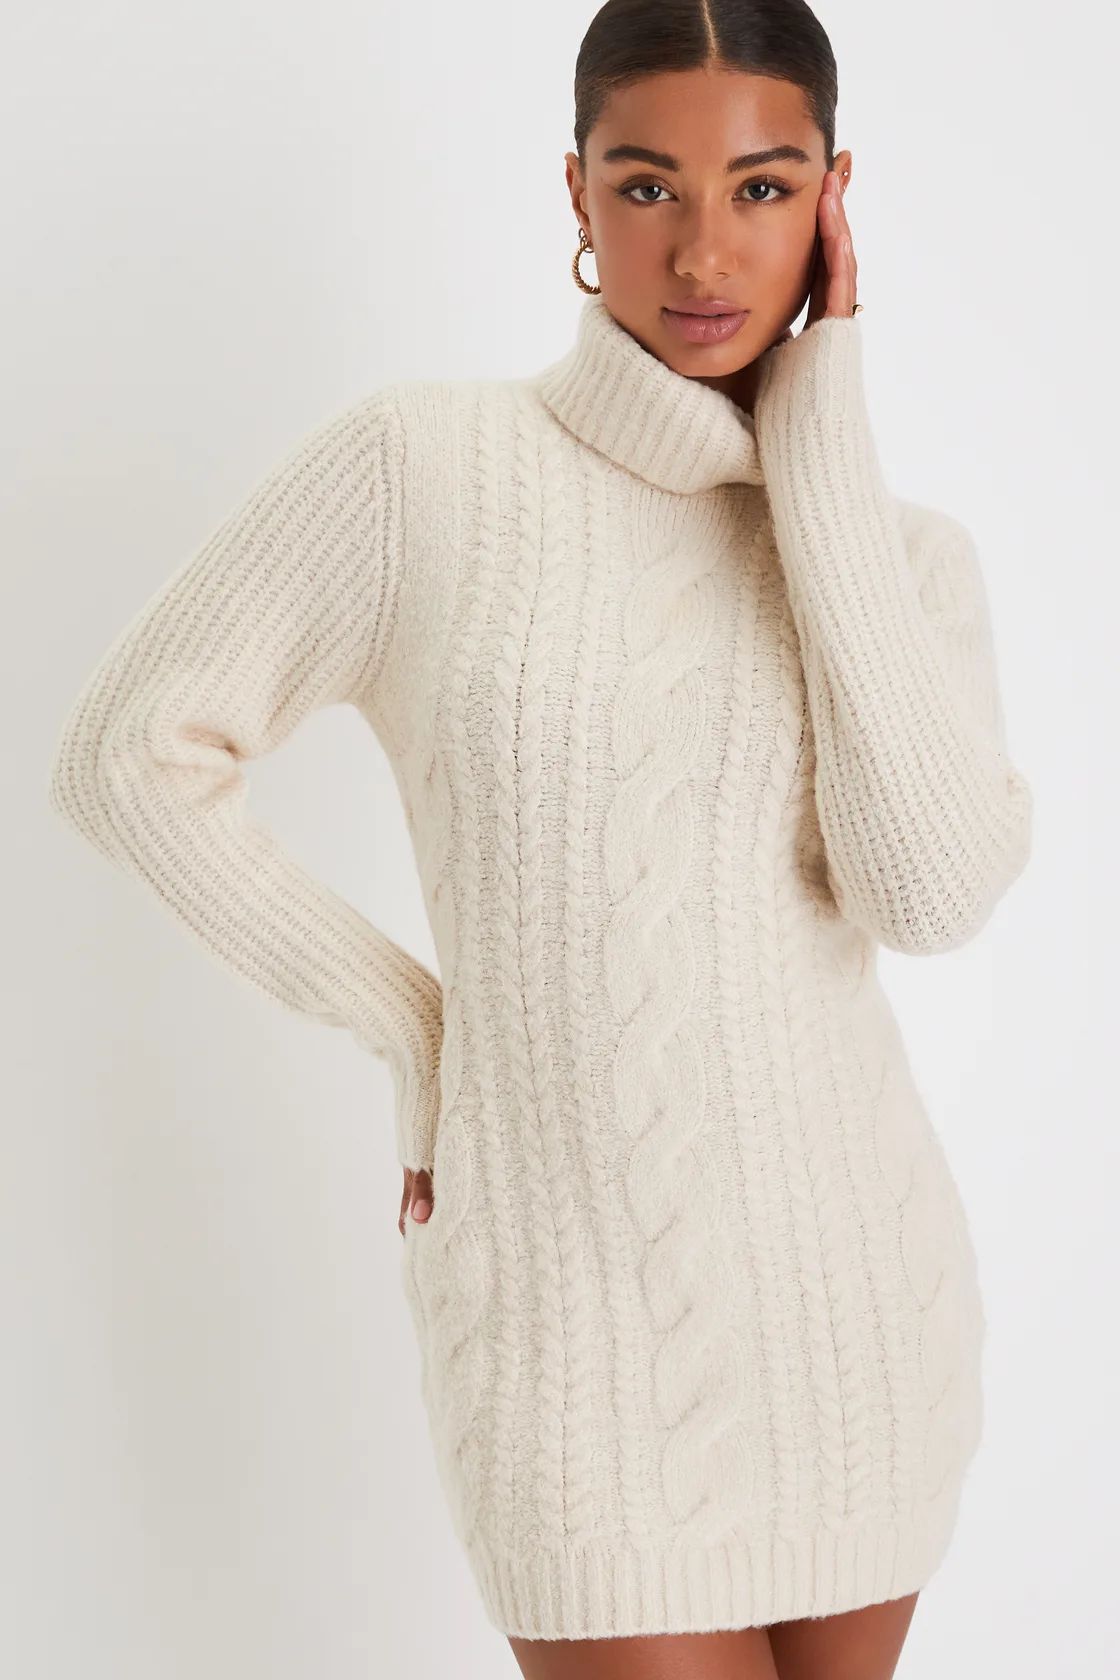 Cozy Vision Ivory Cable Knit Turtleneck Mini Sweater Dress | Lulus (US)